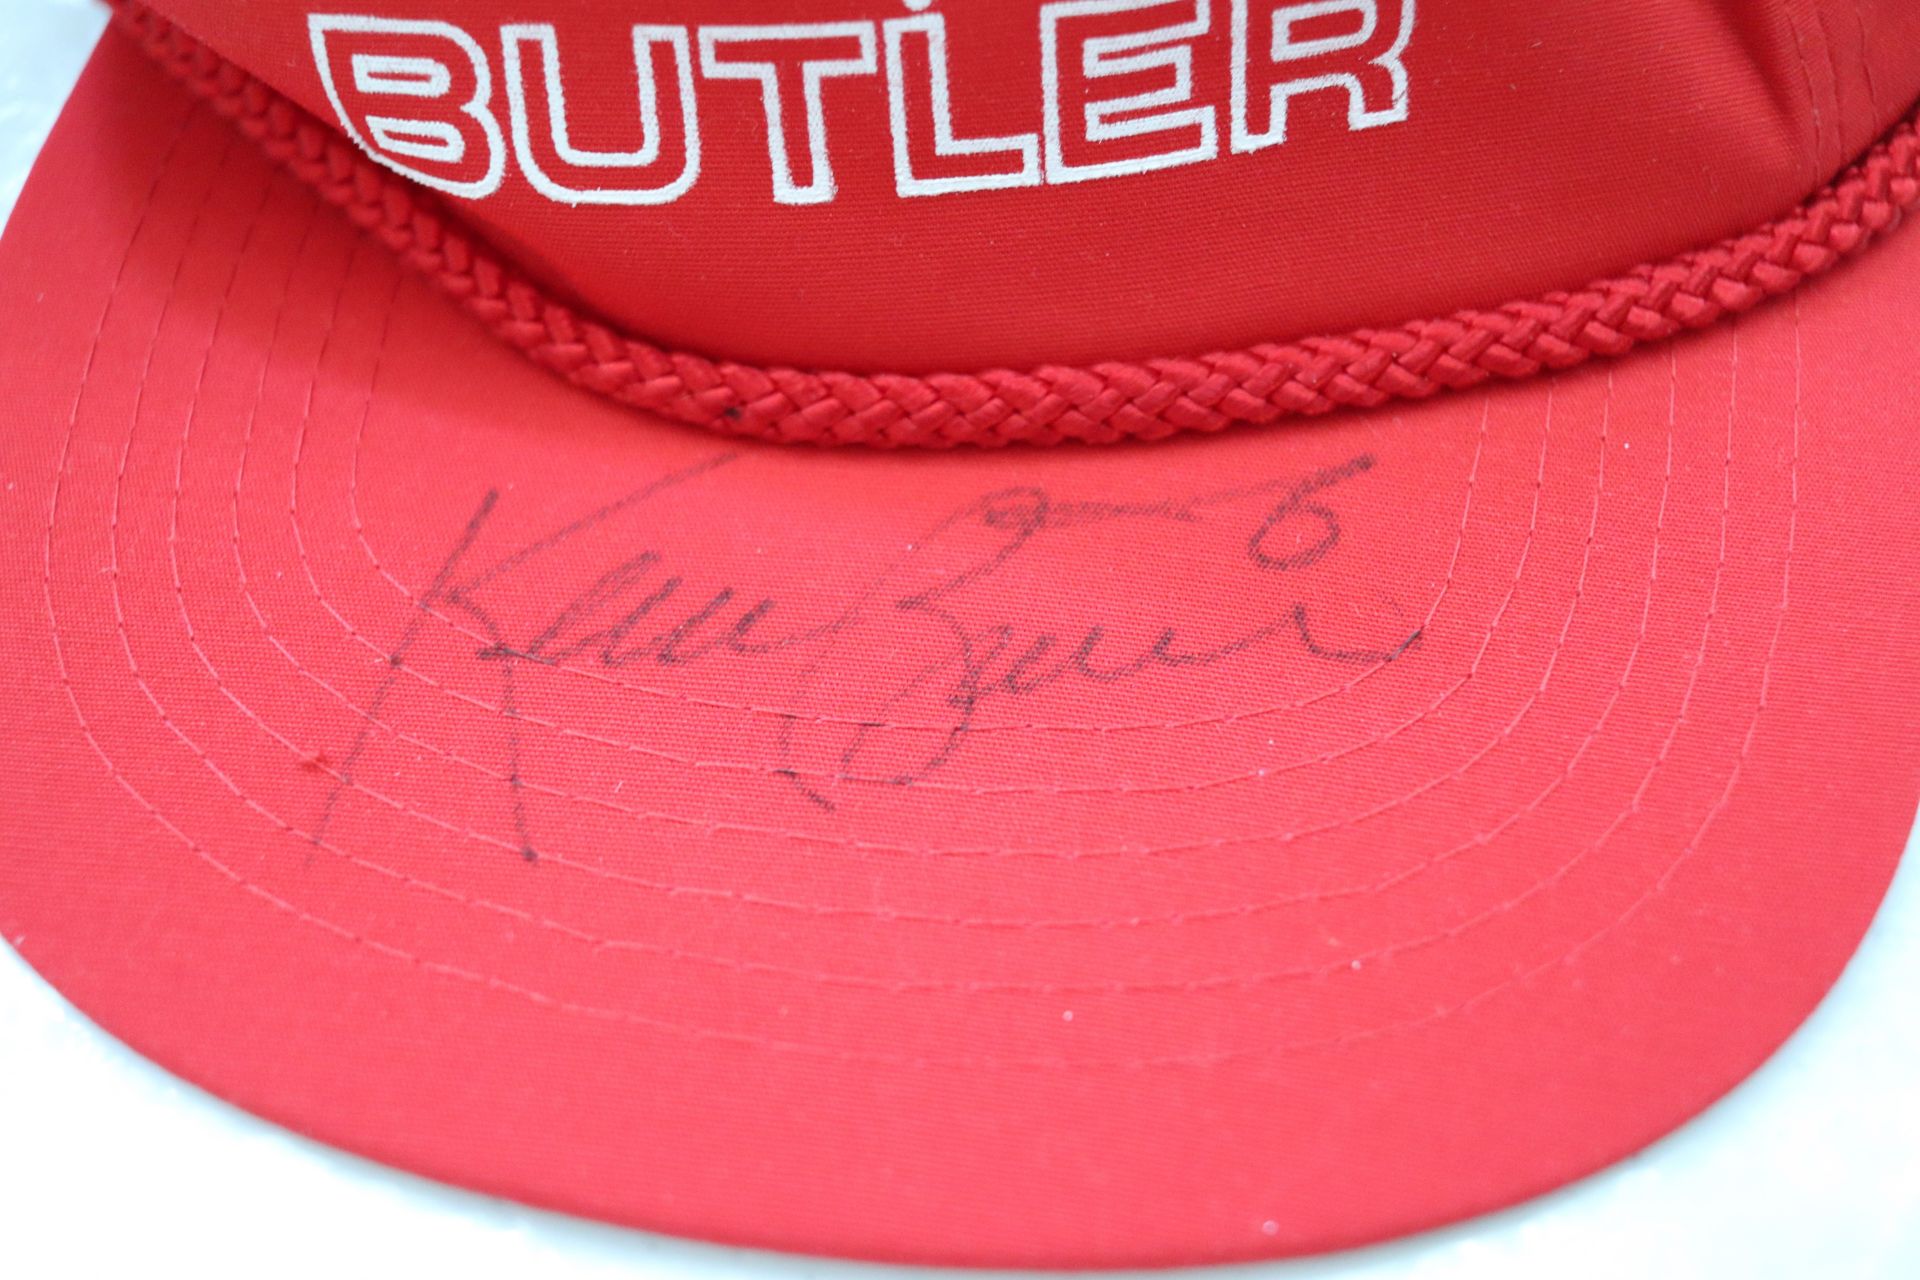 Kevin Butler Butthead signed hat - Image 2 of 3